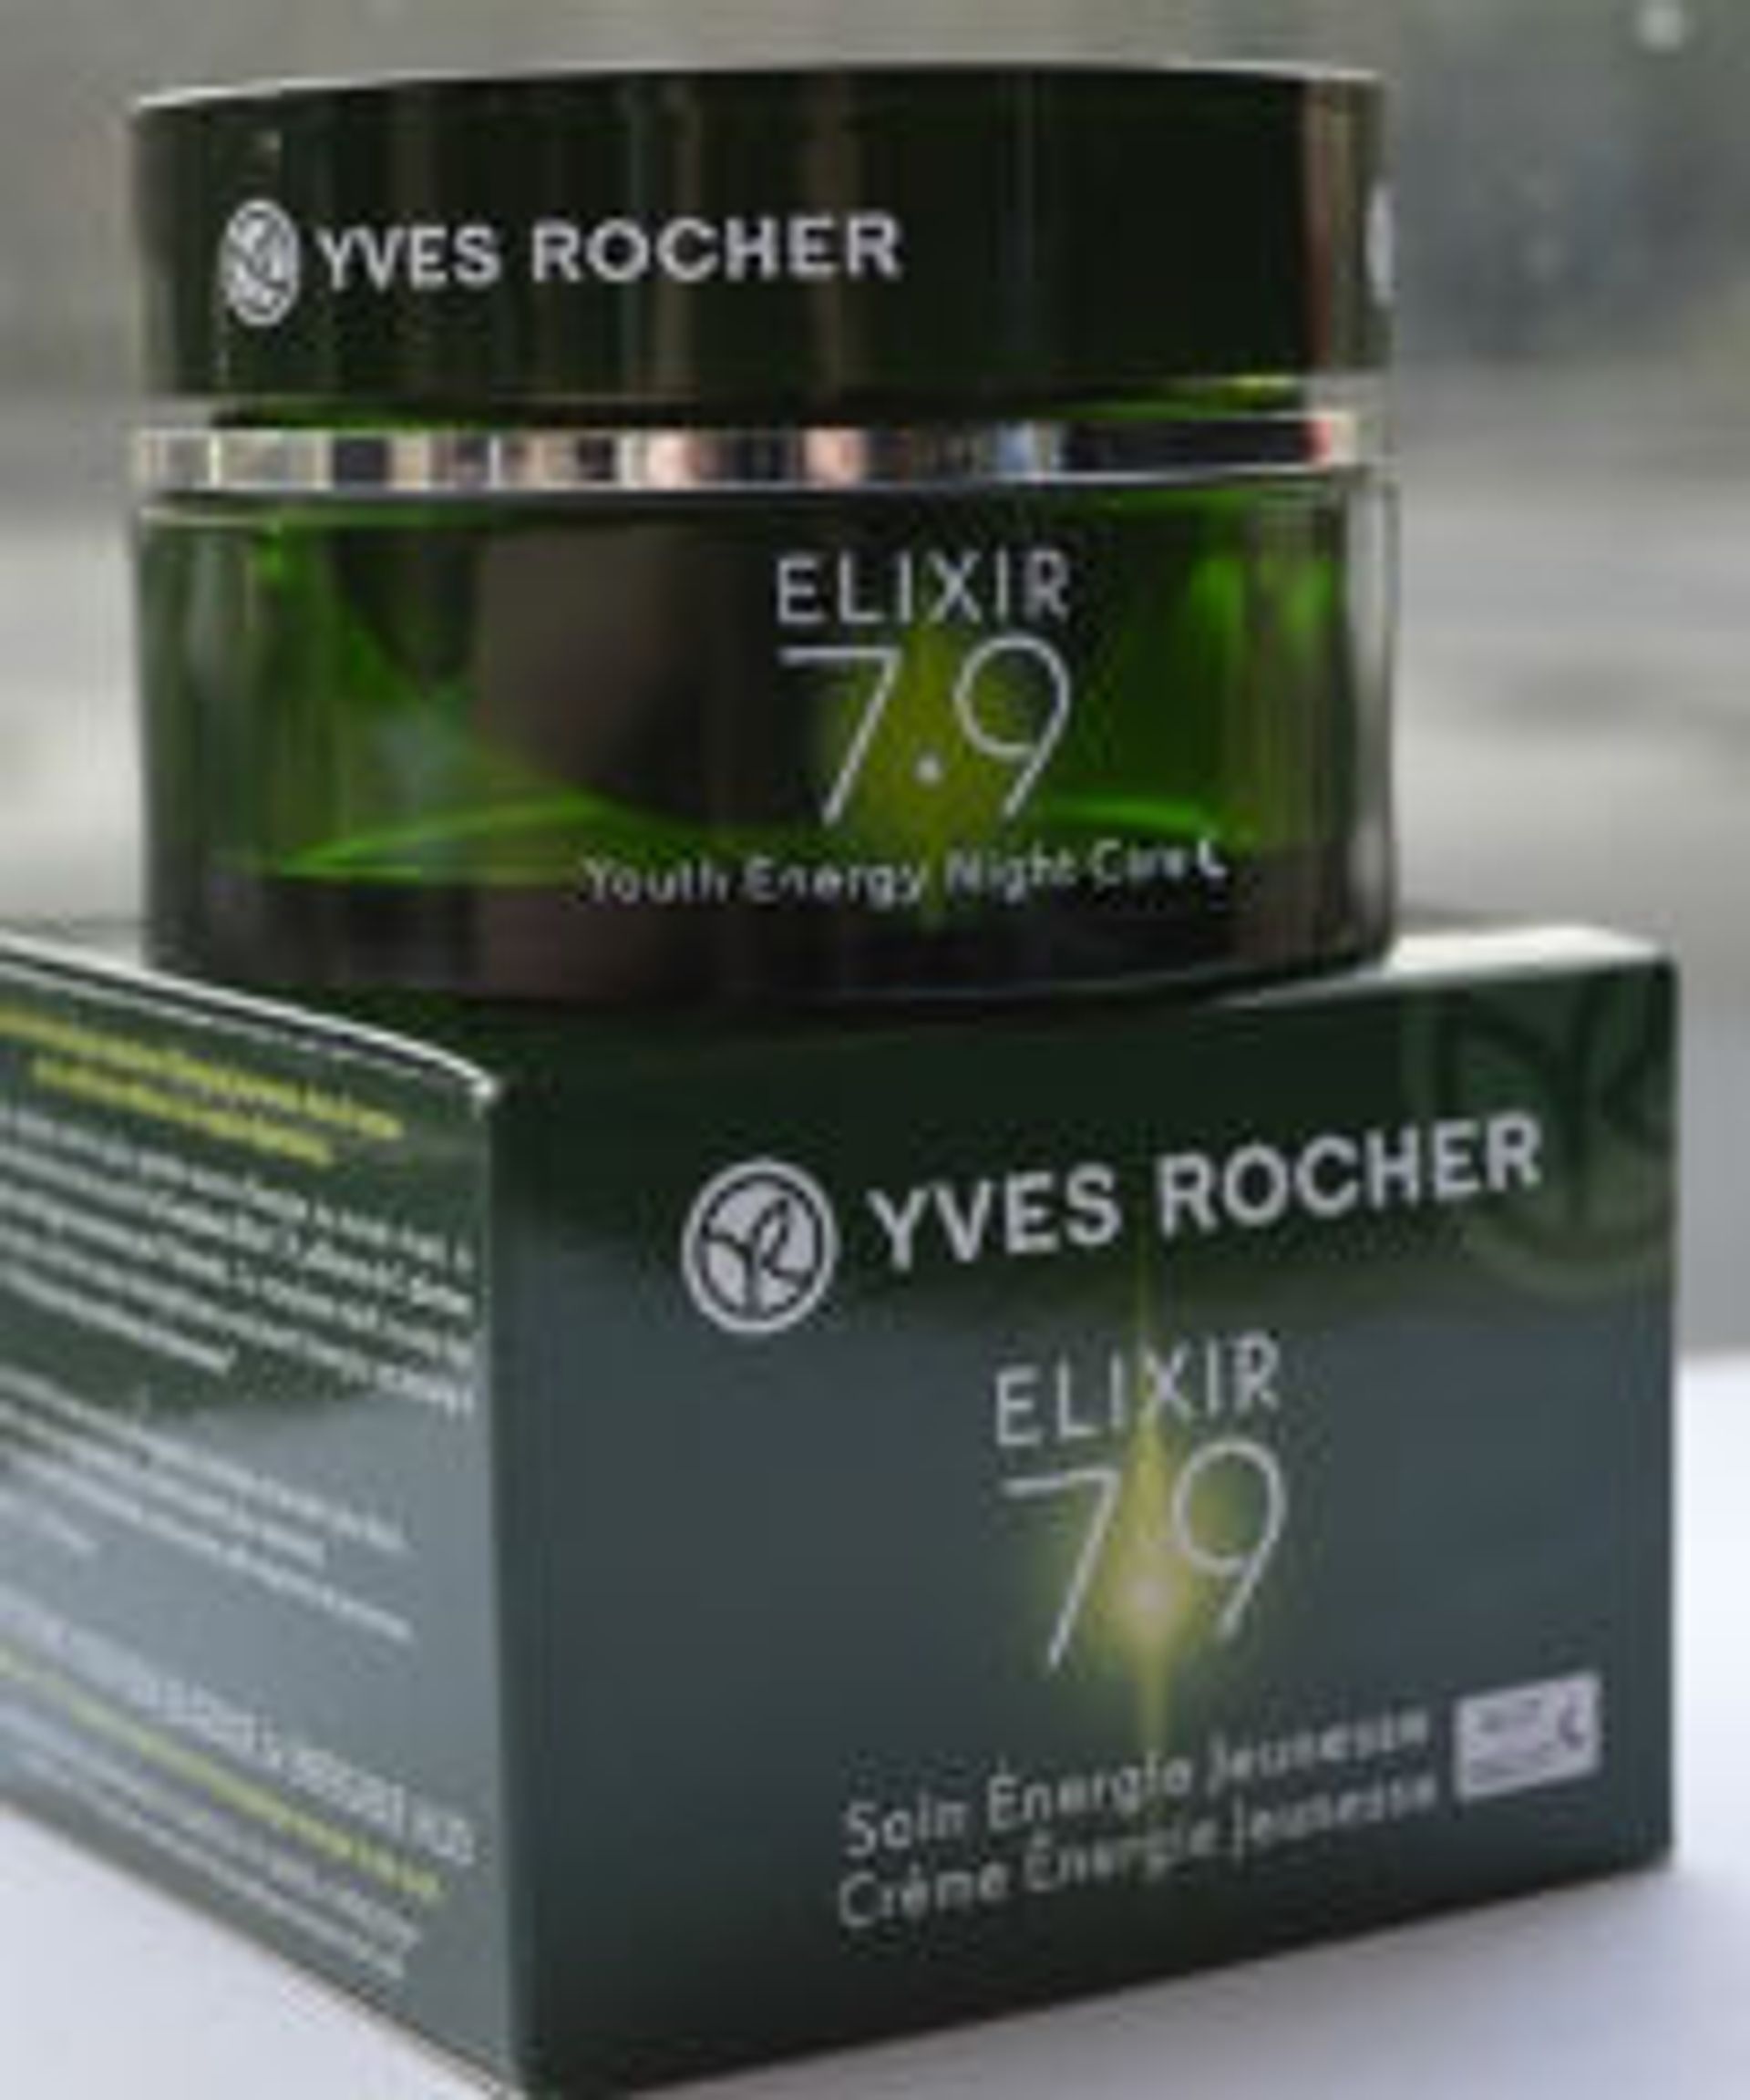 verhoging wervelkolom Reflectie De energieke Yves Rocher Elixir 7.9 producten - Girlscene